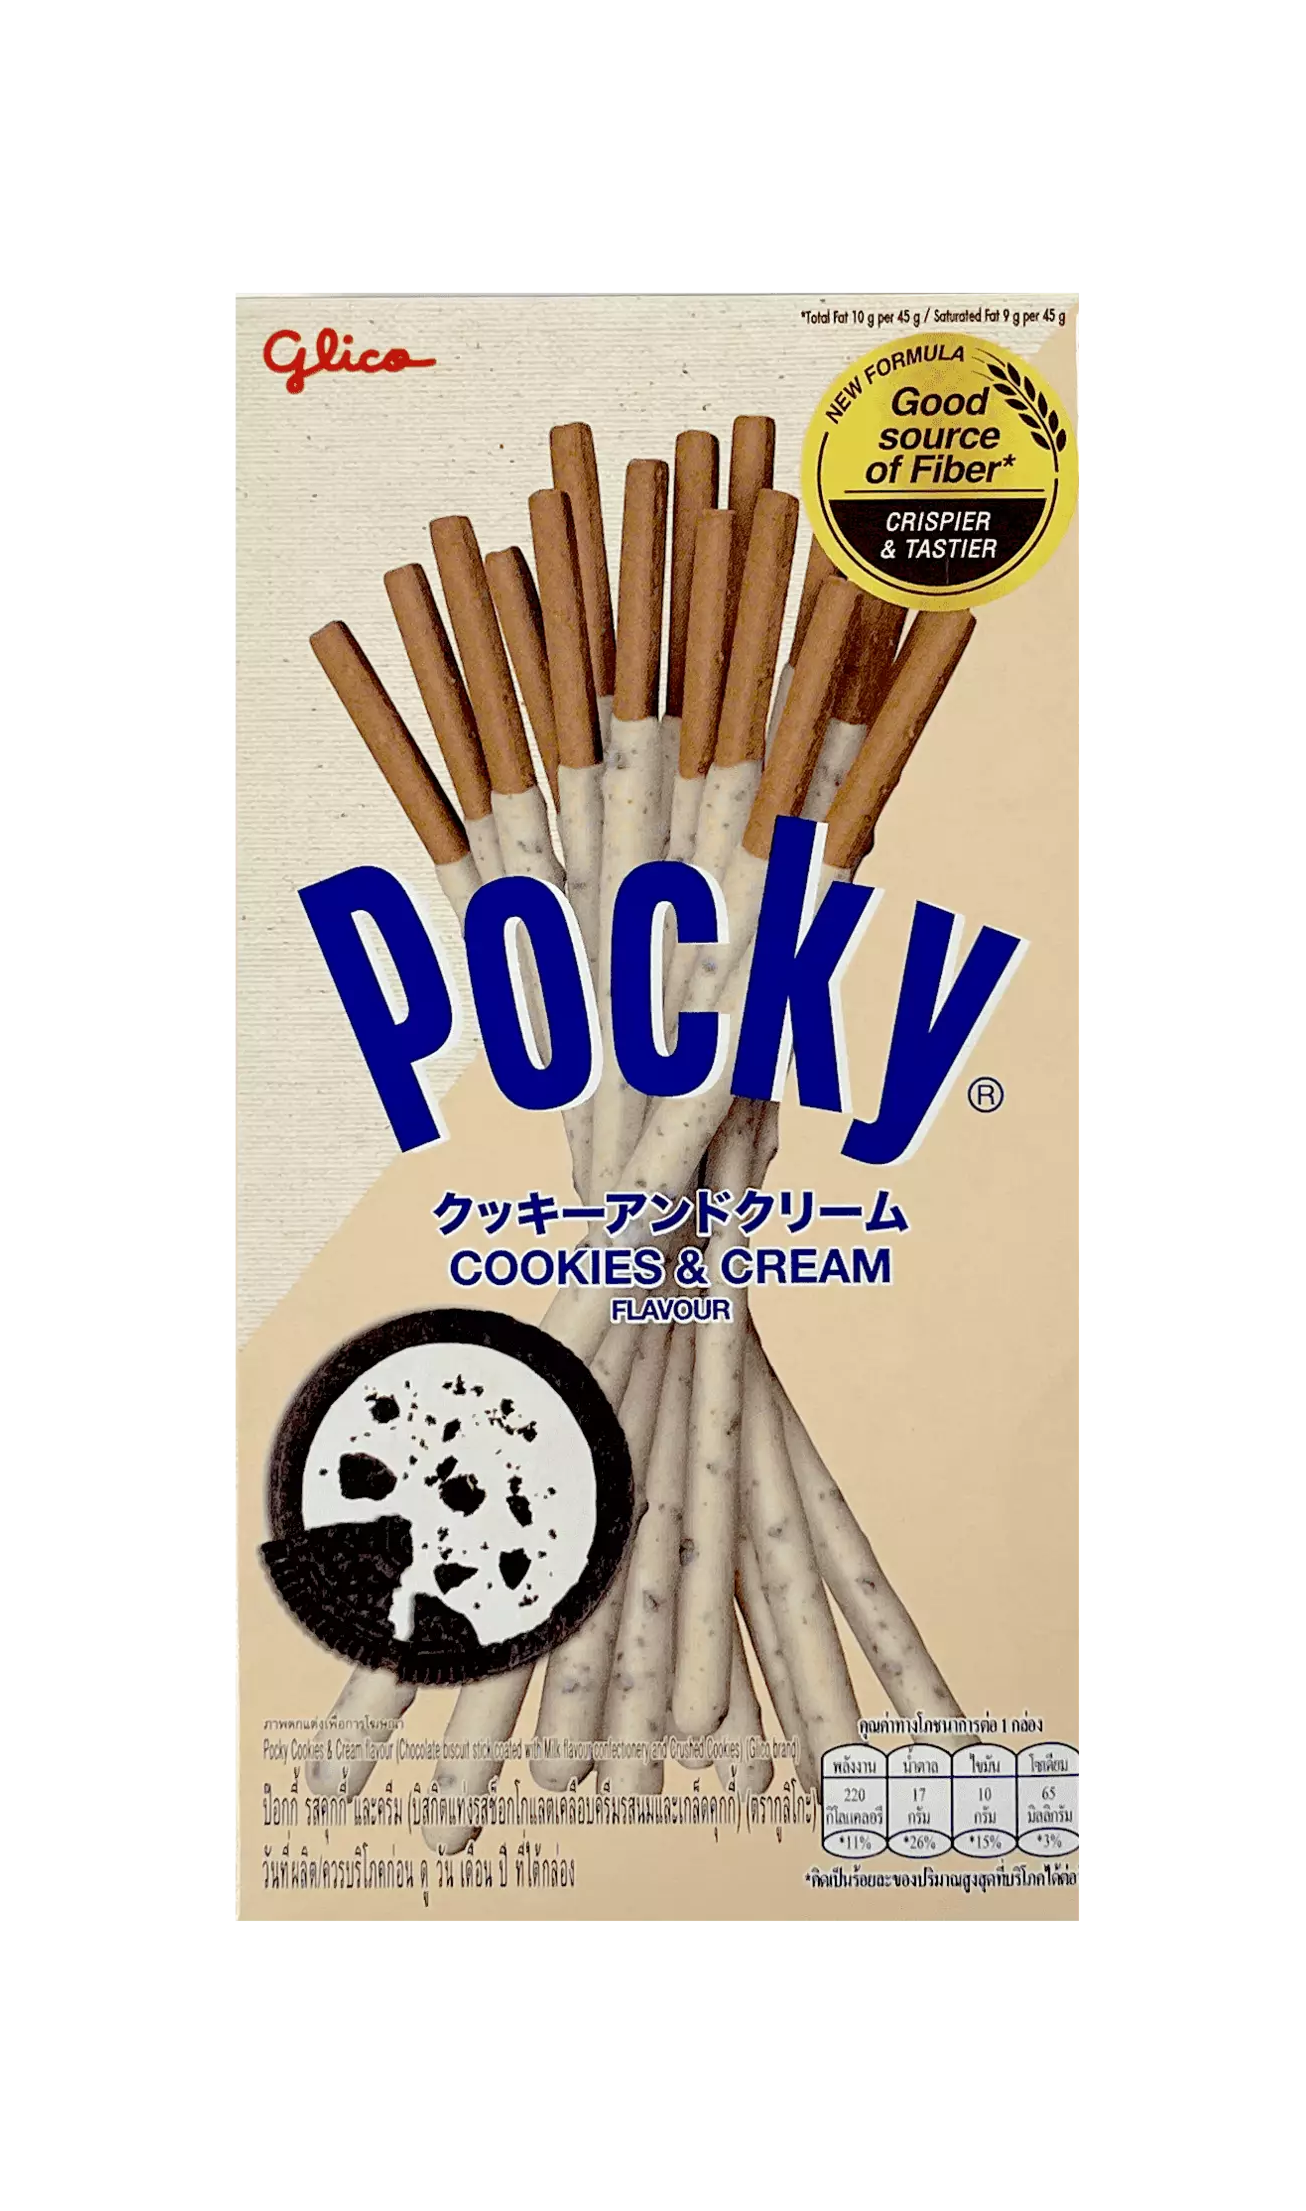 Pocky Cookies And Cream Flavor 45g Glico